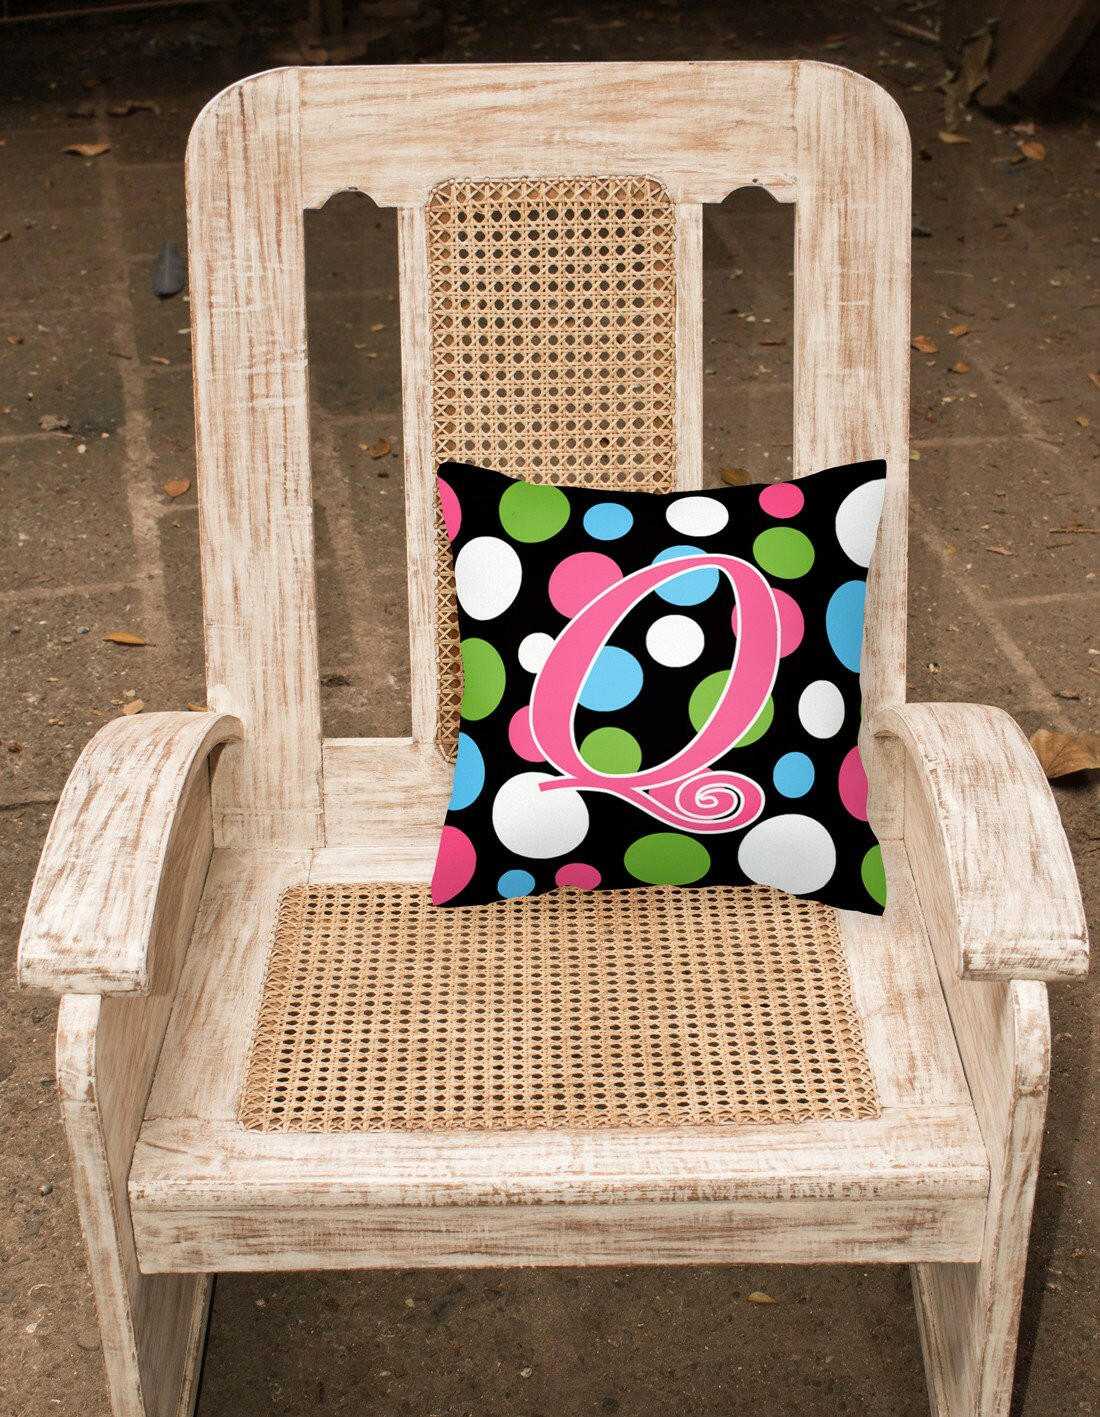 Monogram Initial Q Polkadots and Pink Decorative   Canvas Fabric Pillow CJ1038 - the-store.com